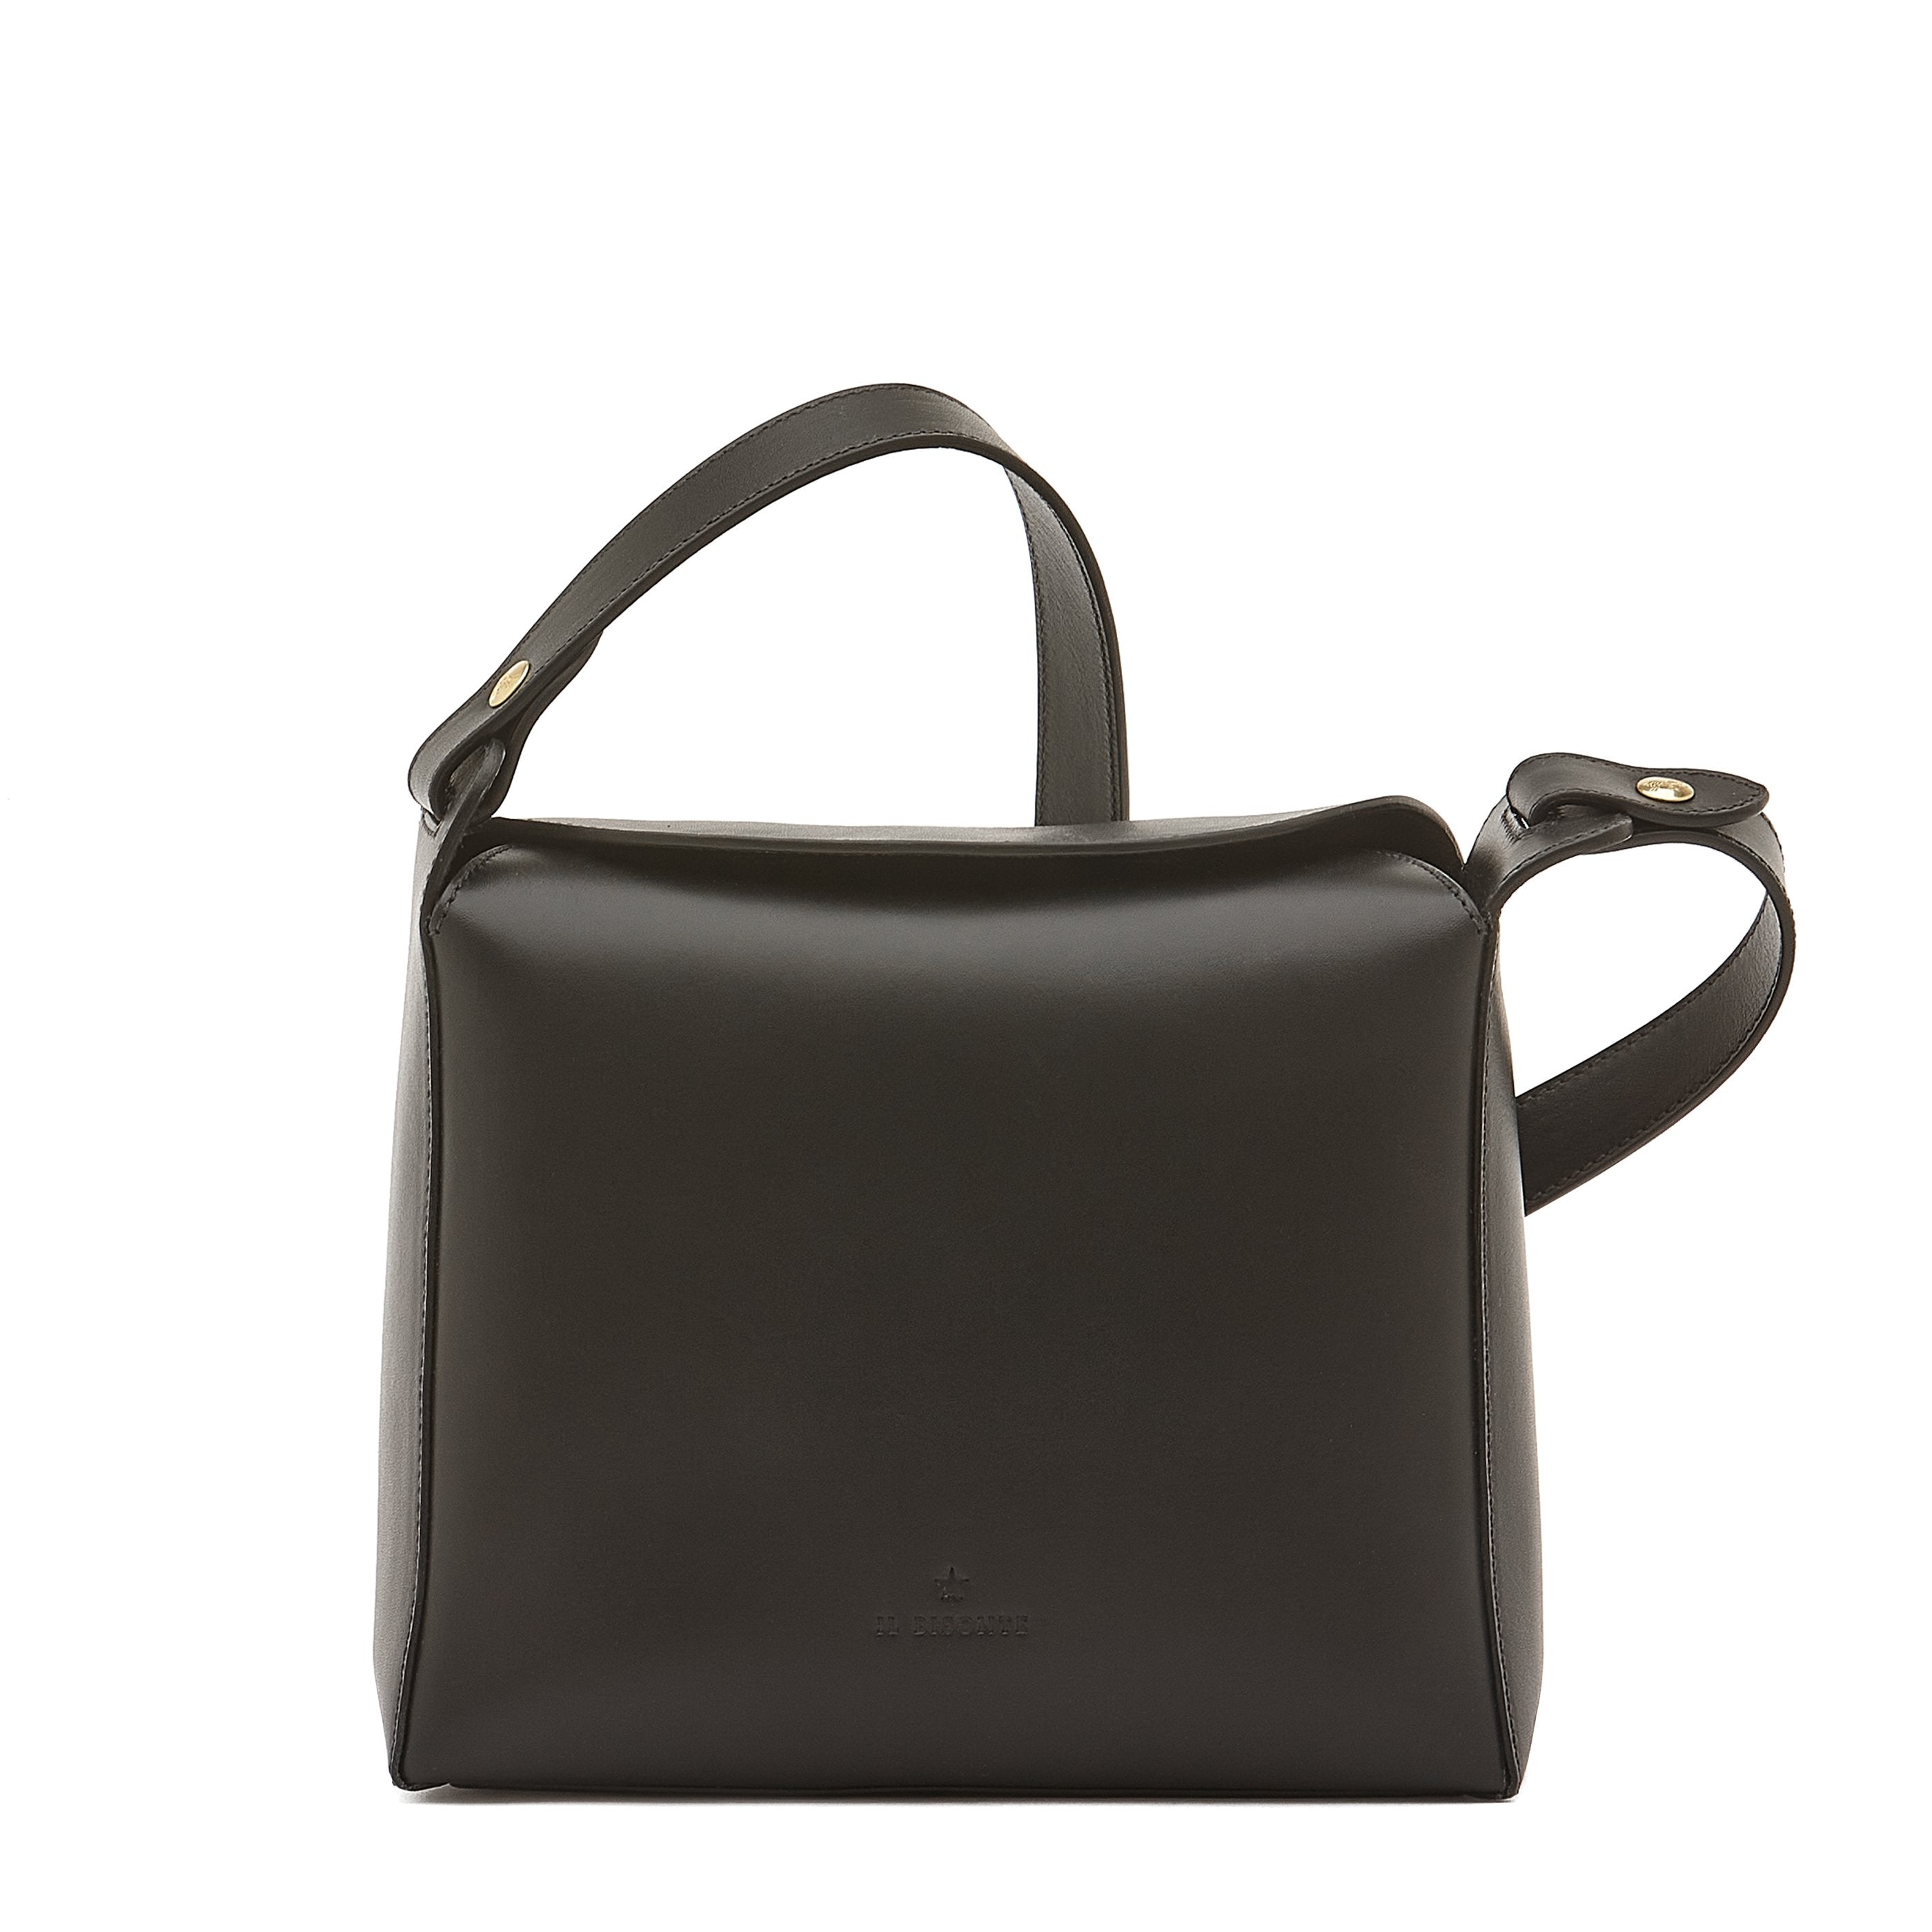 Maggio | Women's shoulder bag in leather color black